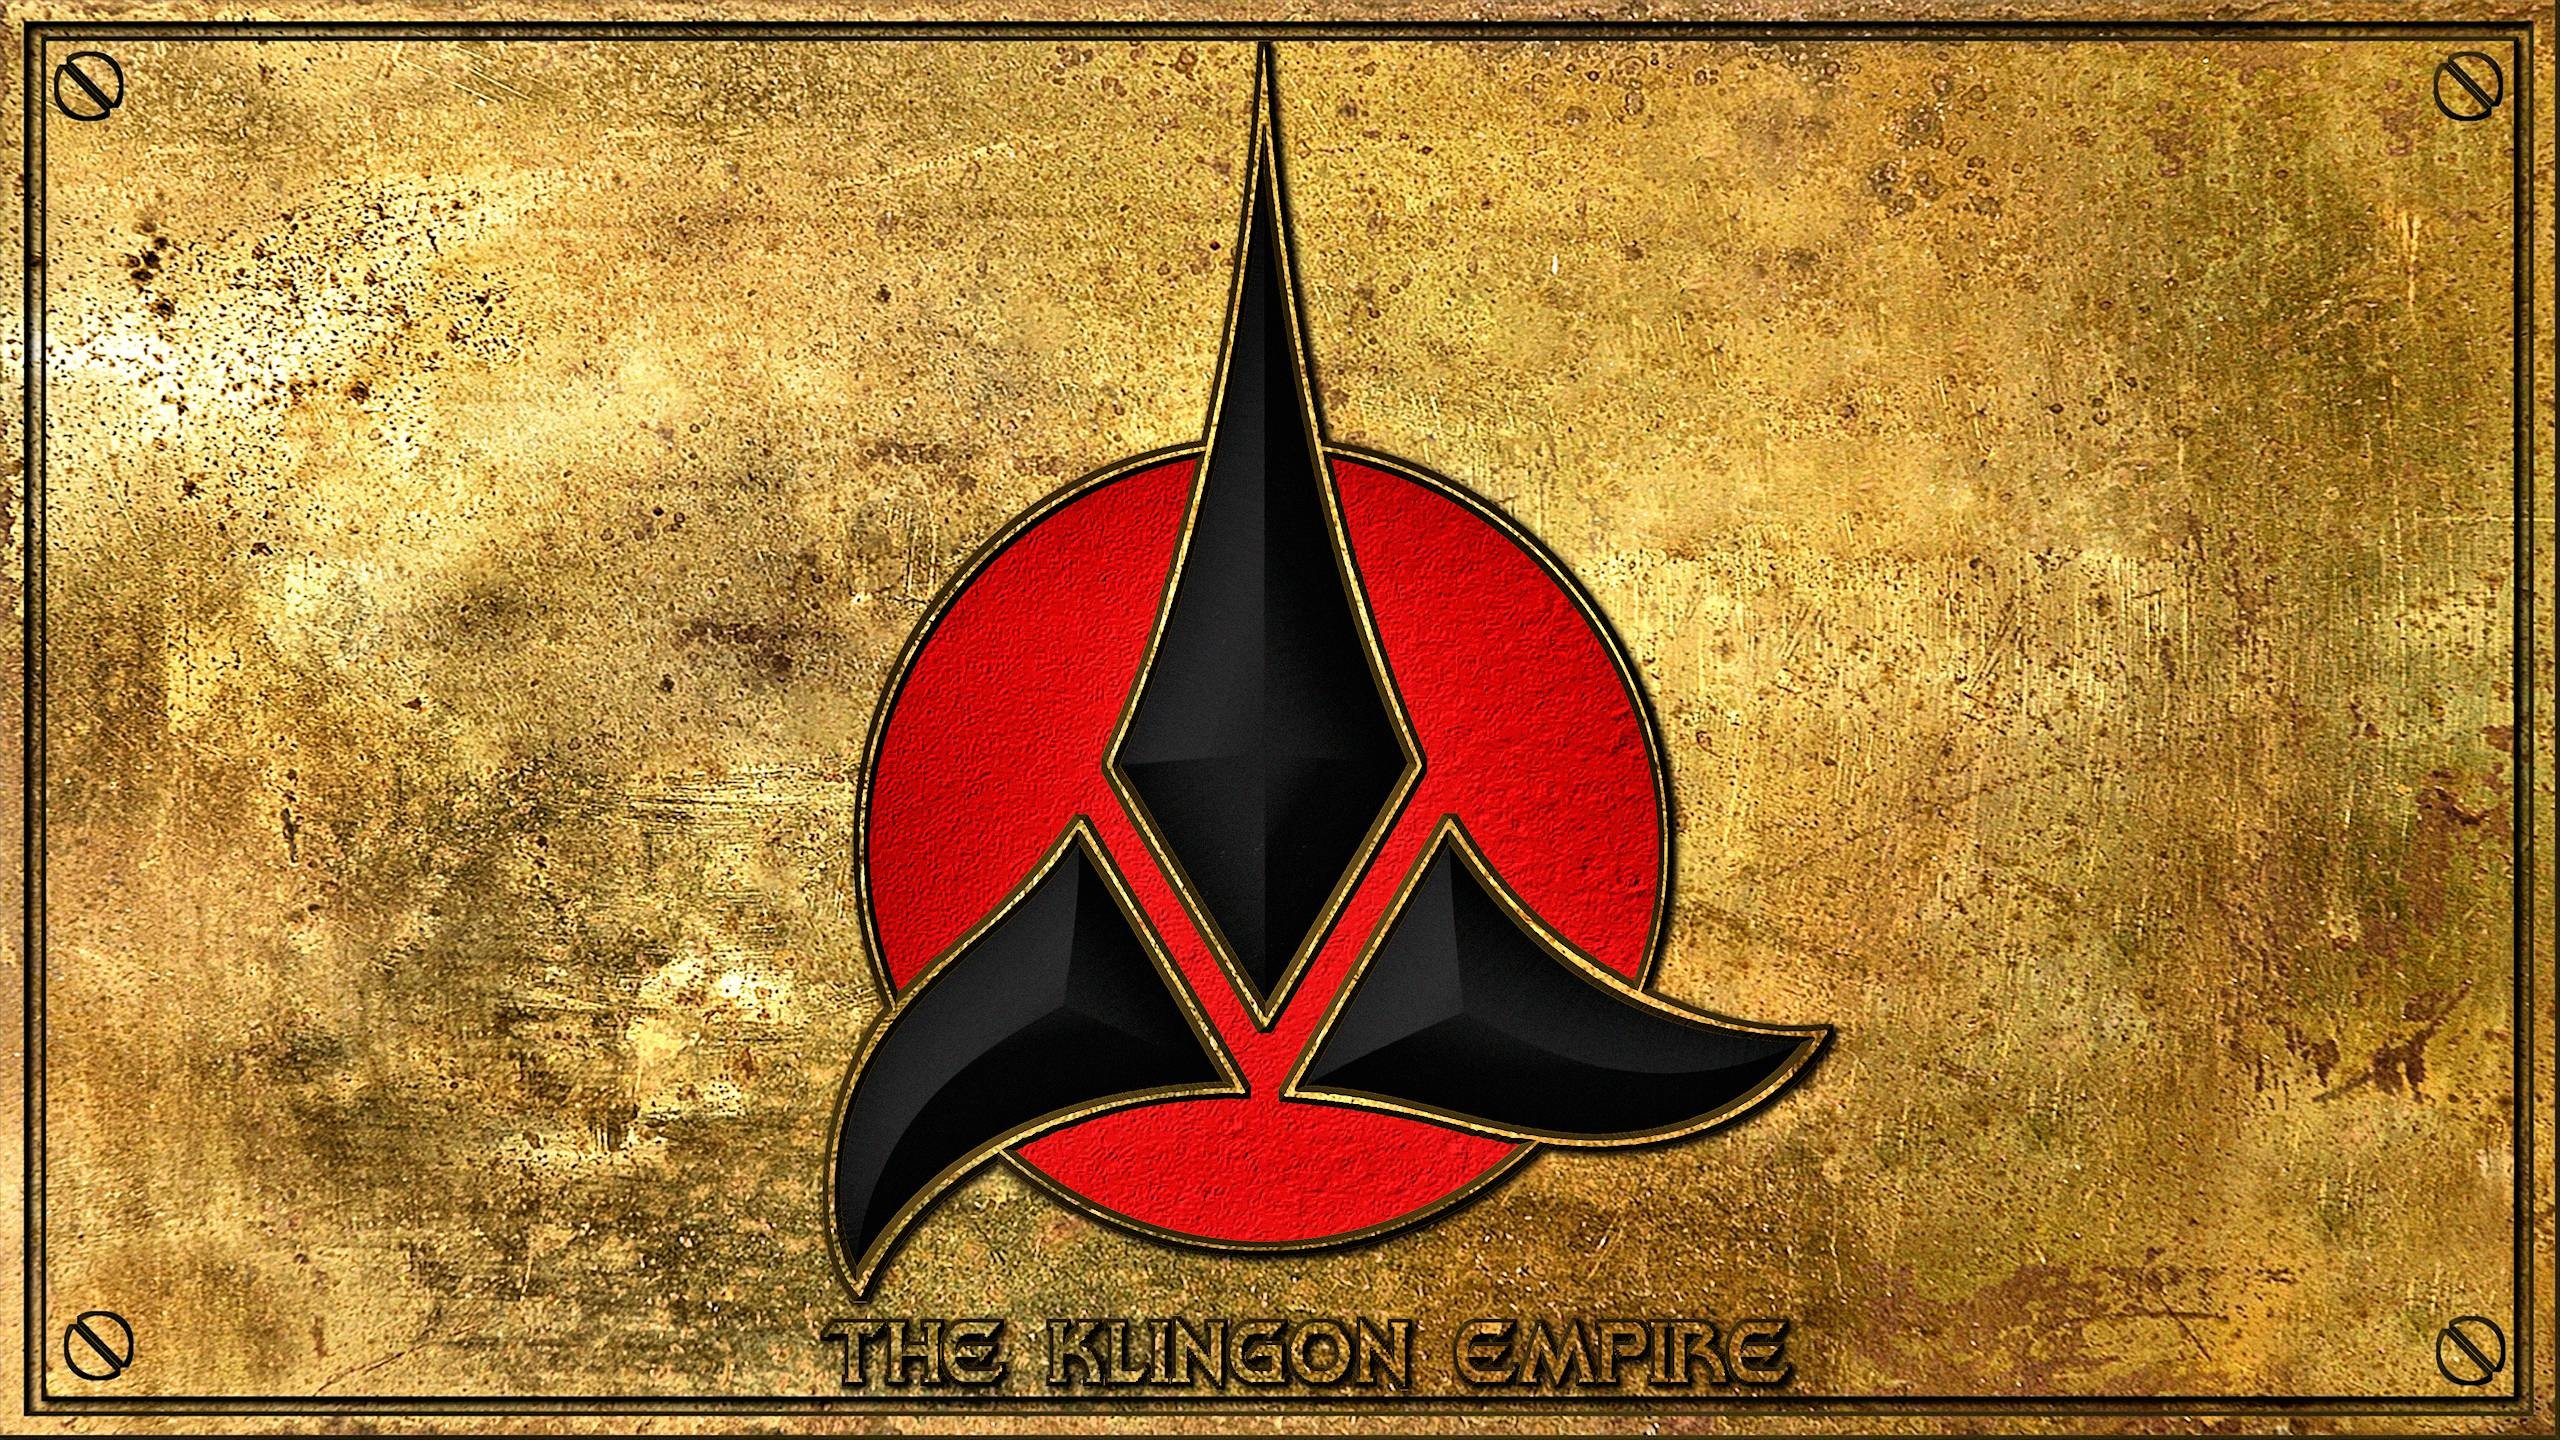 2560x1440 ... Klingon Empire Plaque by Dave-Daring